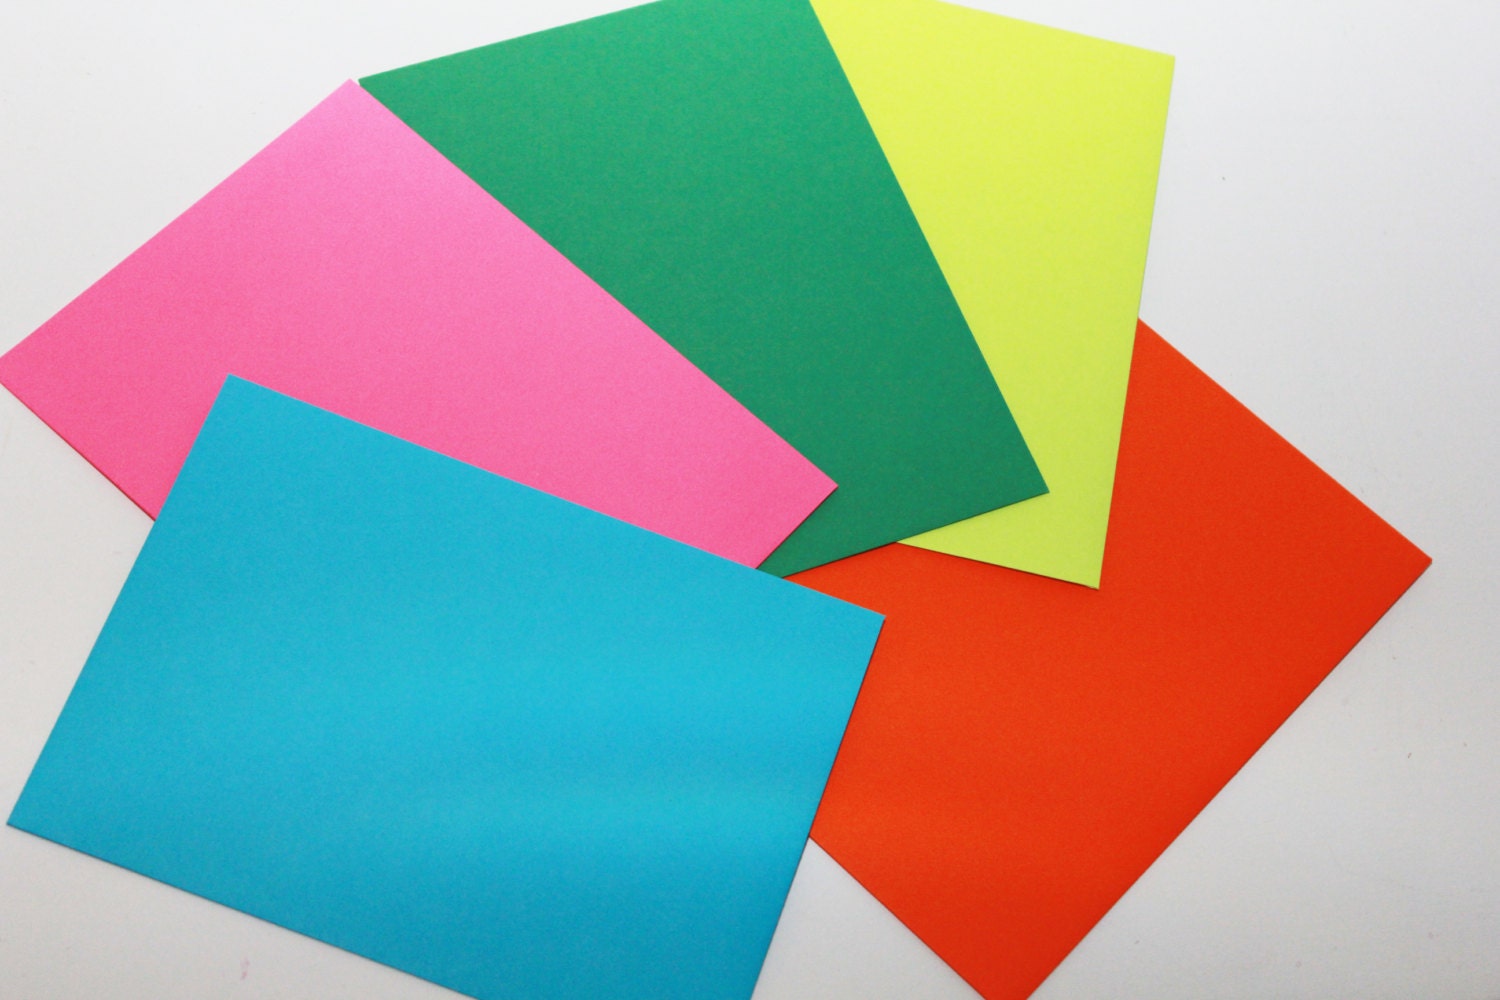 Wholesale A7 Envelopes Colored Square Flap Envelopes A7 Coloring Wallpapers Download Free Images Wallpaper [coloring876.blogspot.com]